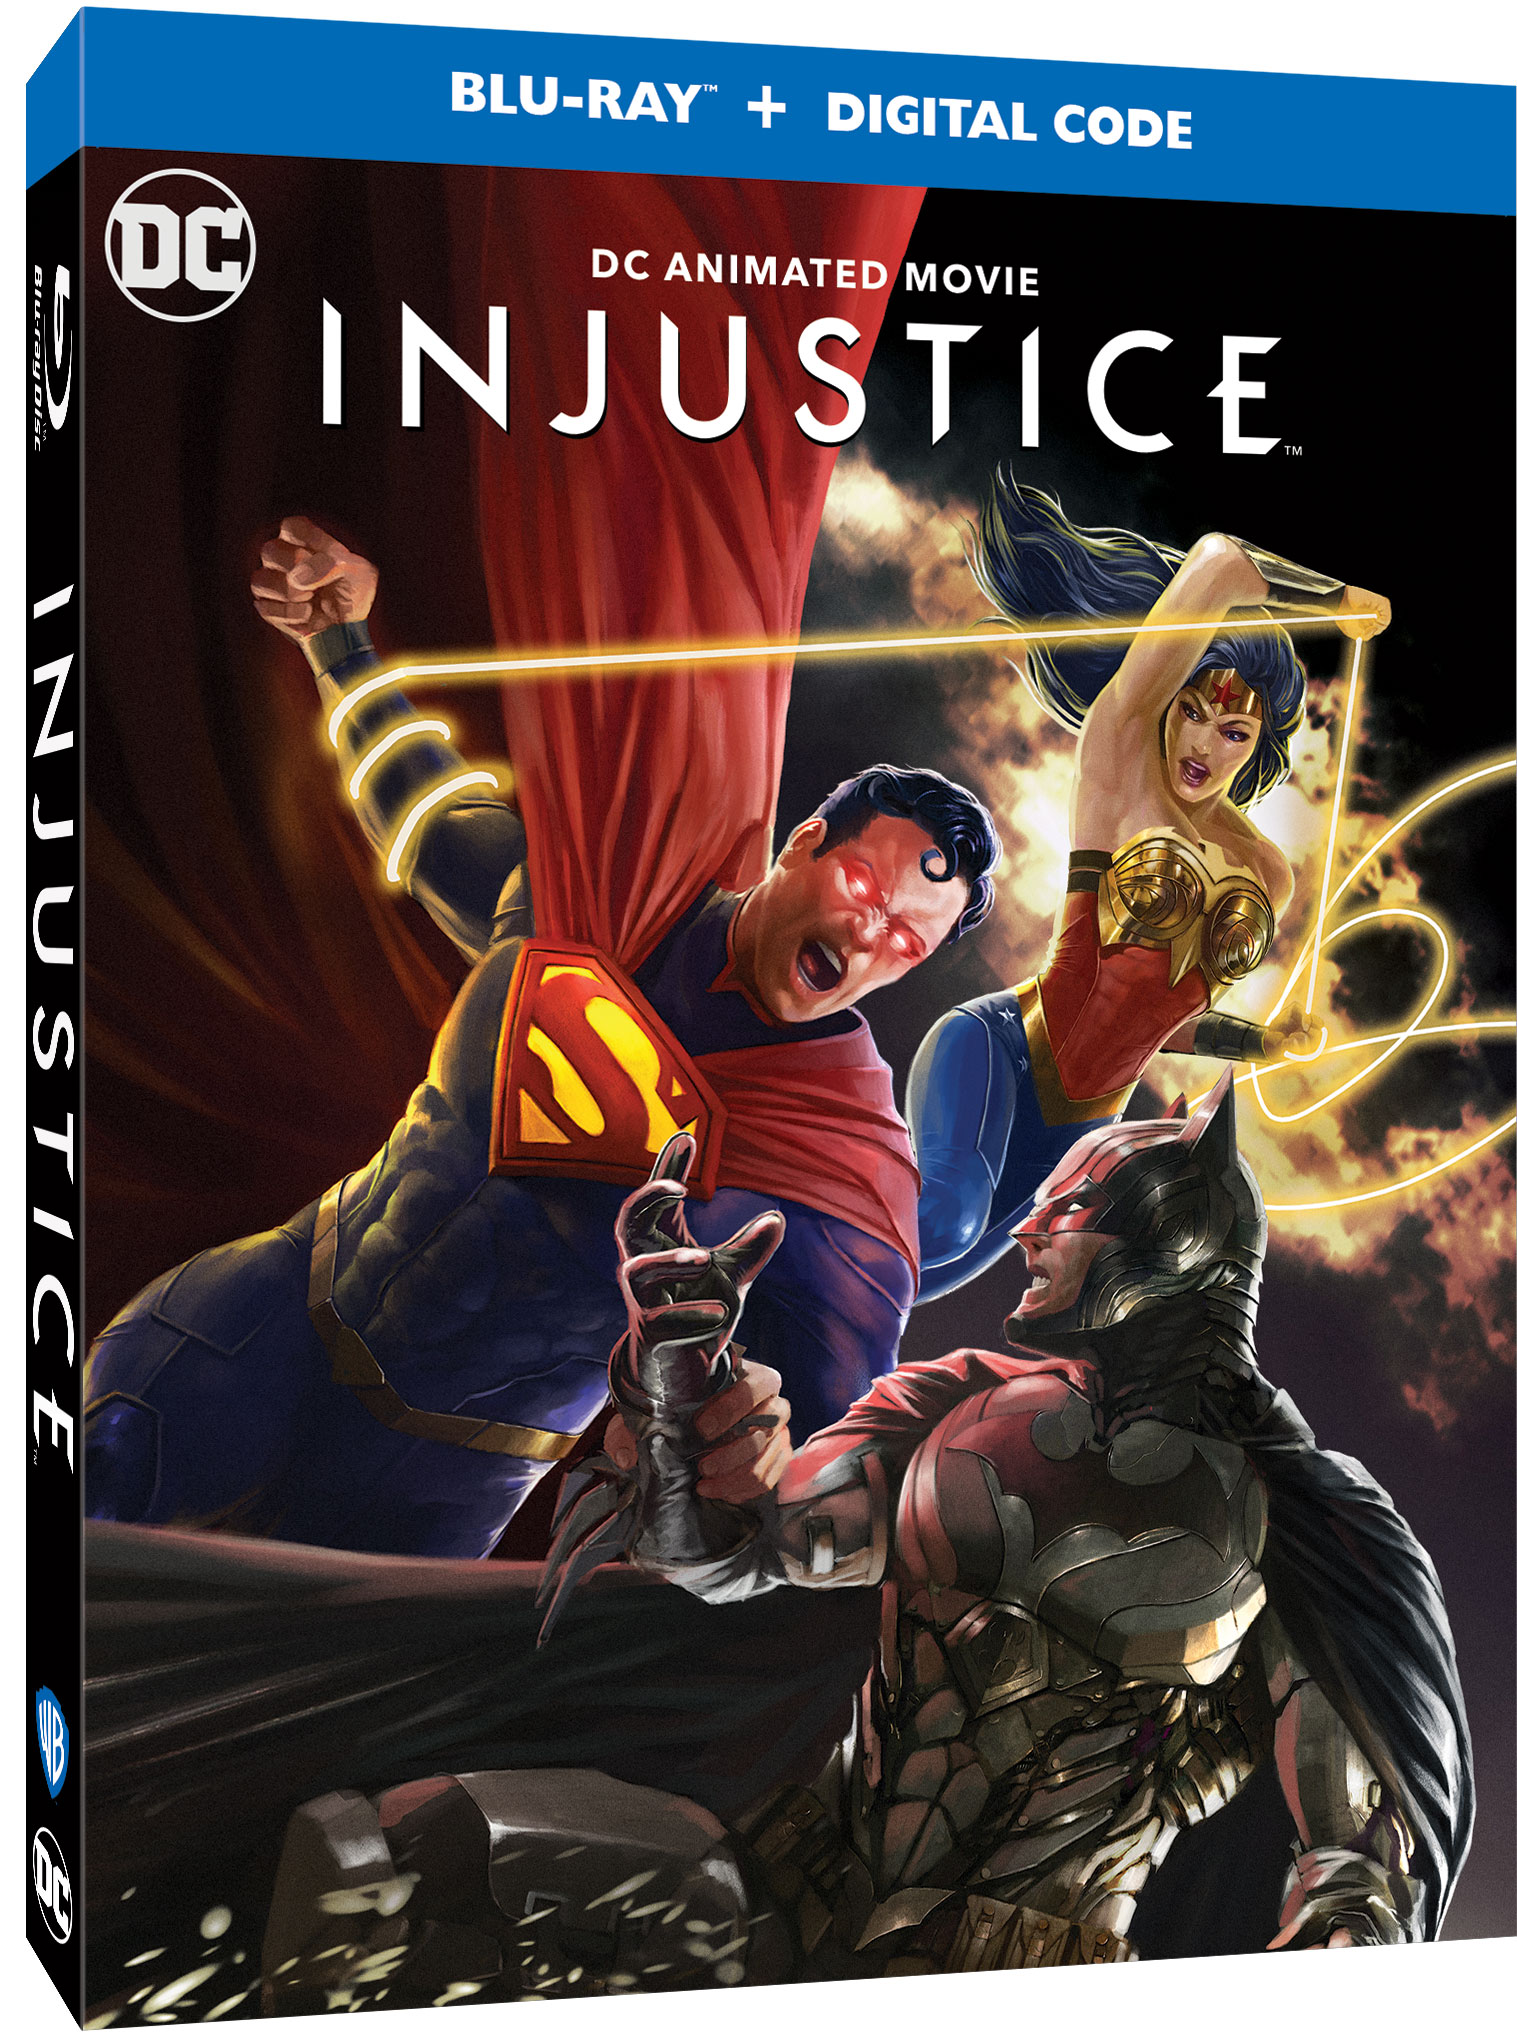 Injustice animated movie